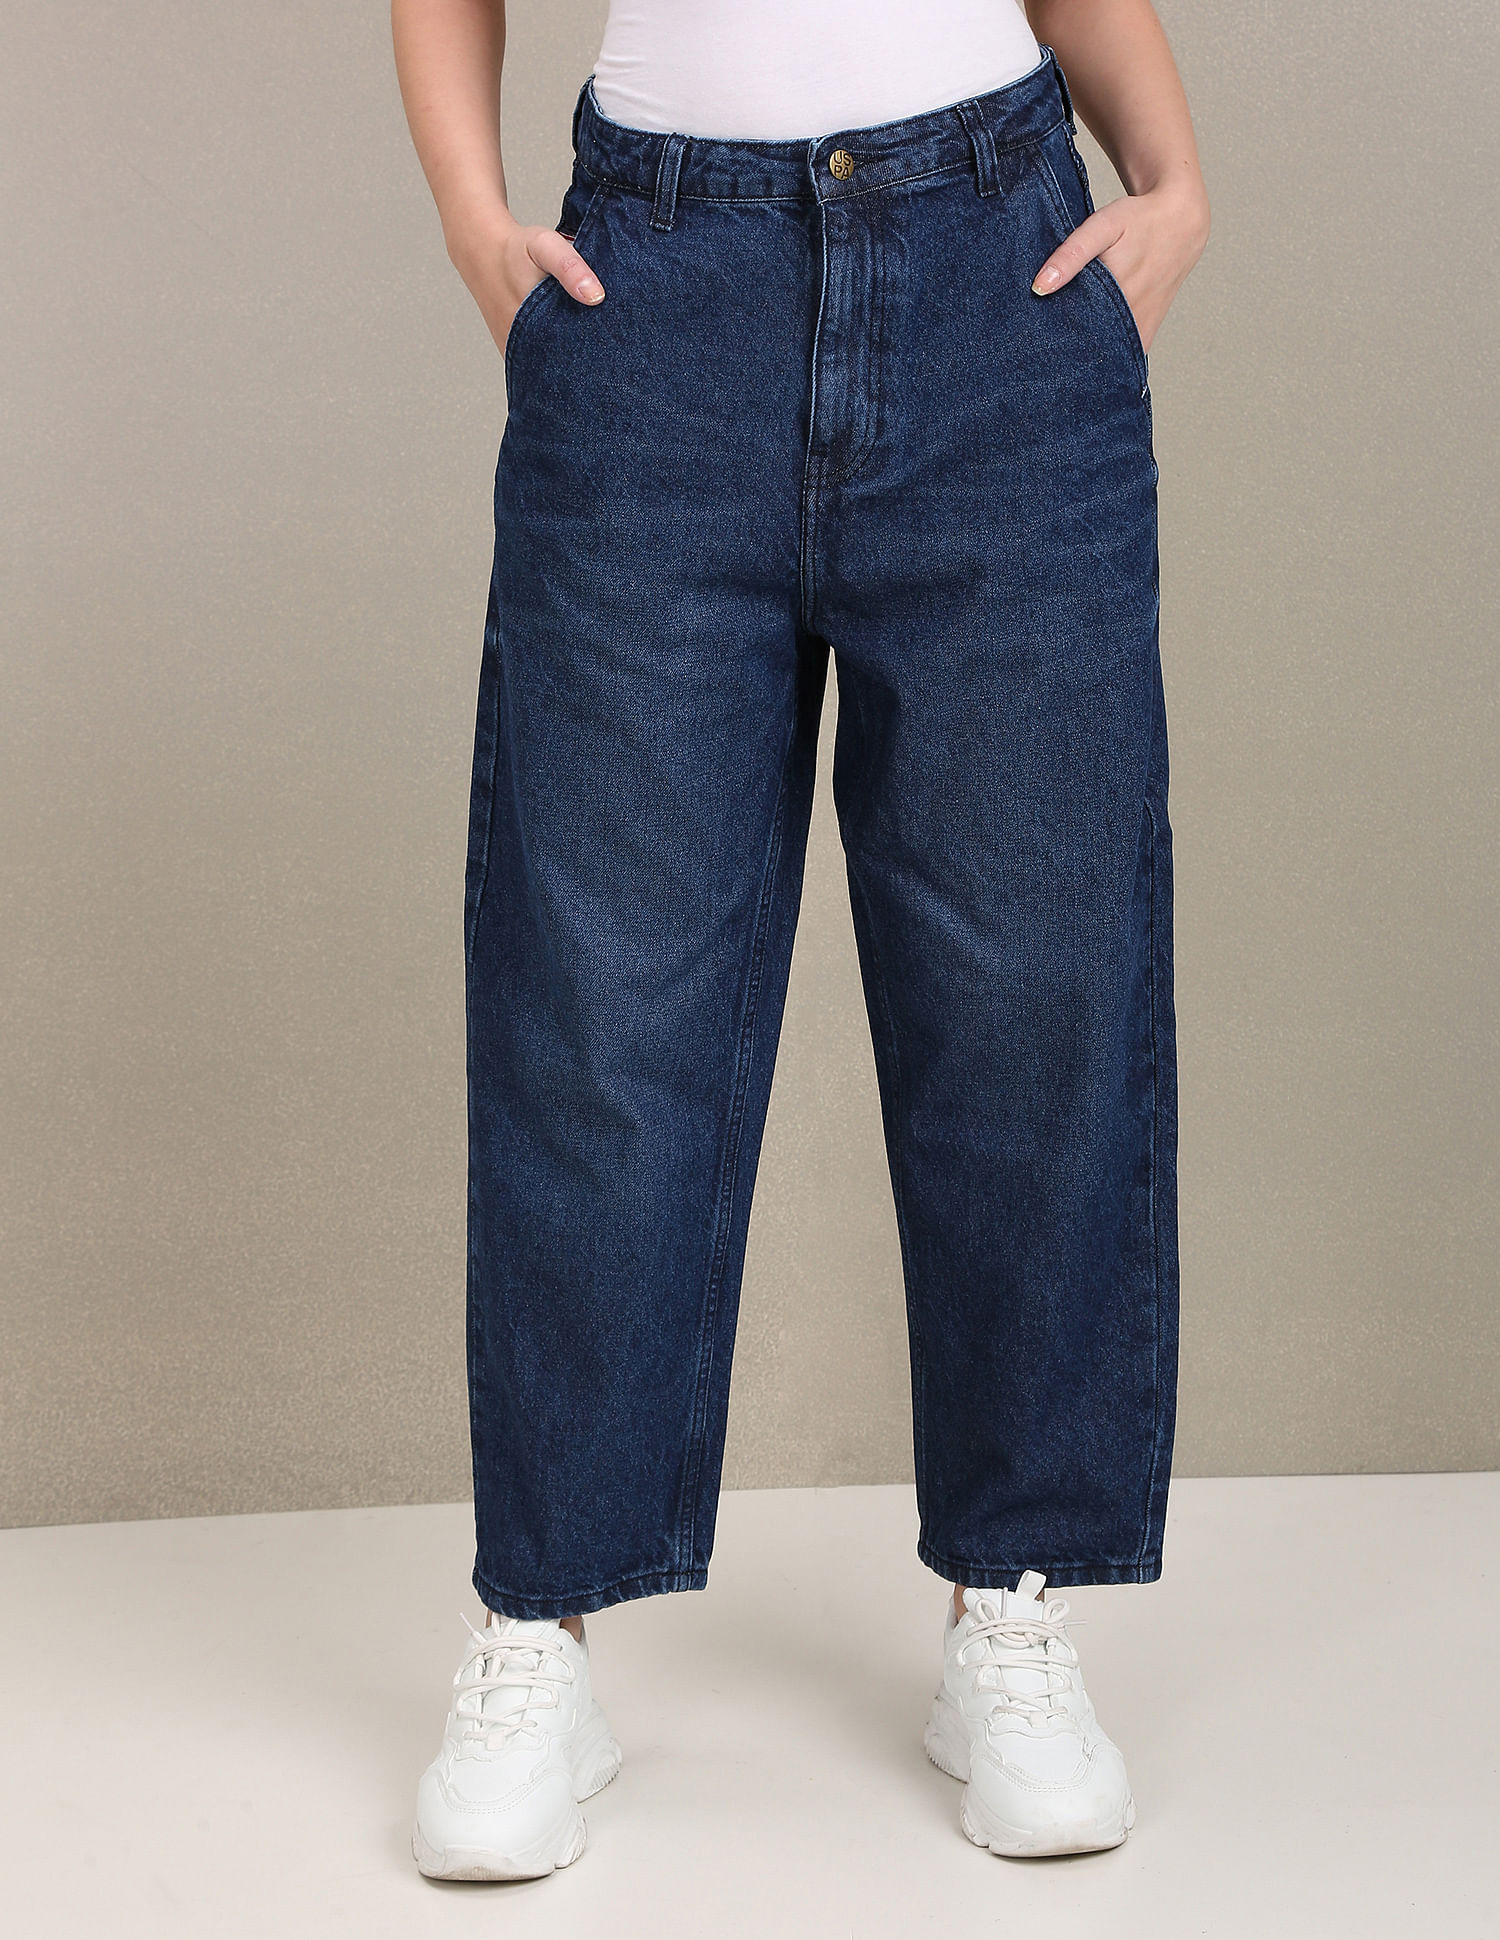 Women's Ultra High-Rise Distressed Medium Wash Dad Jeans